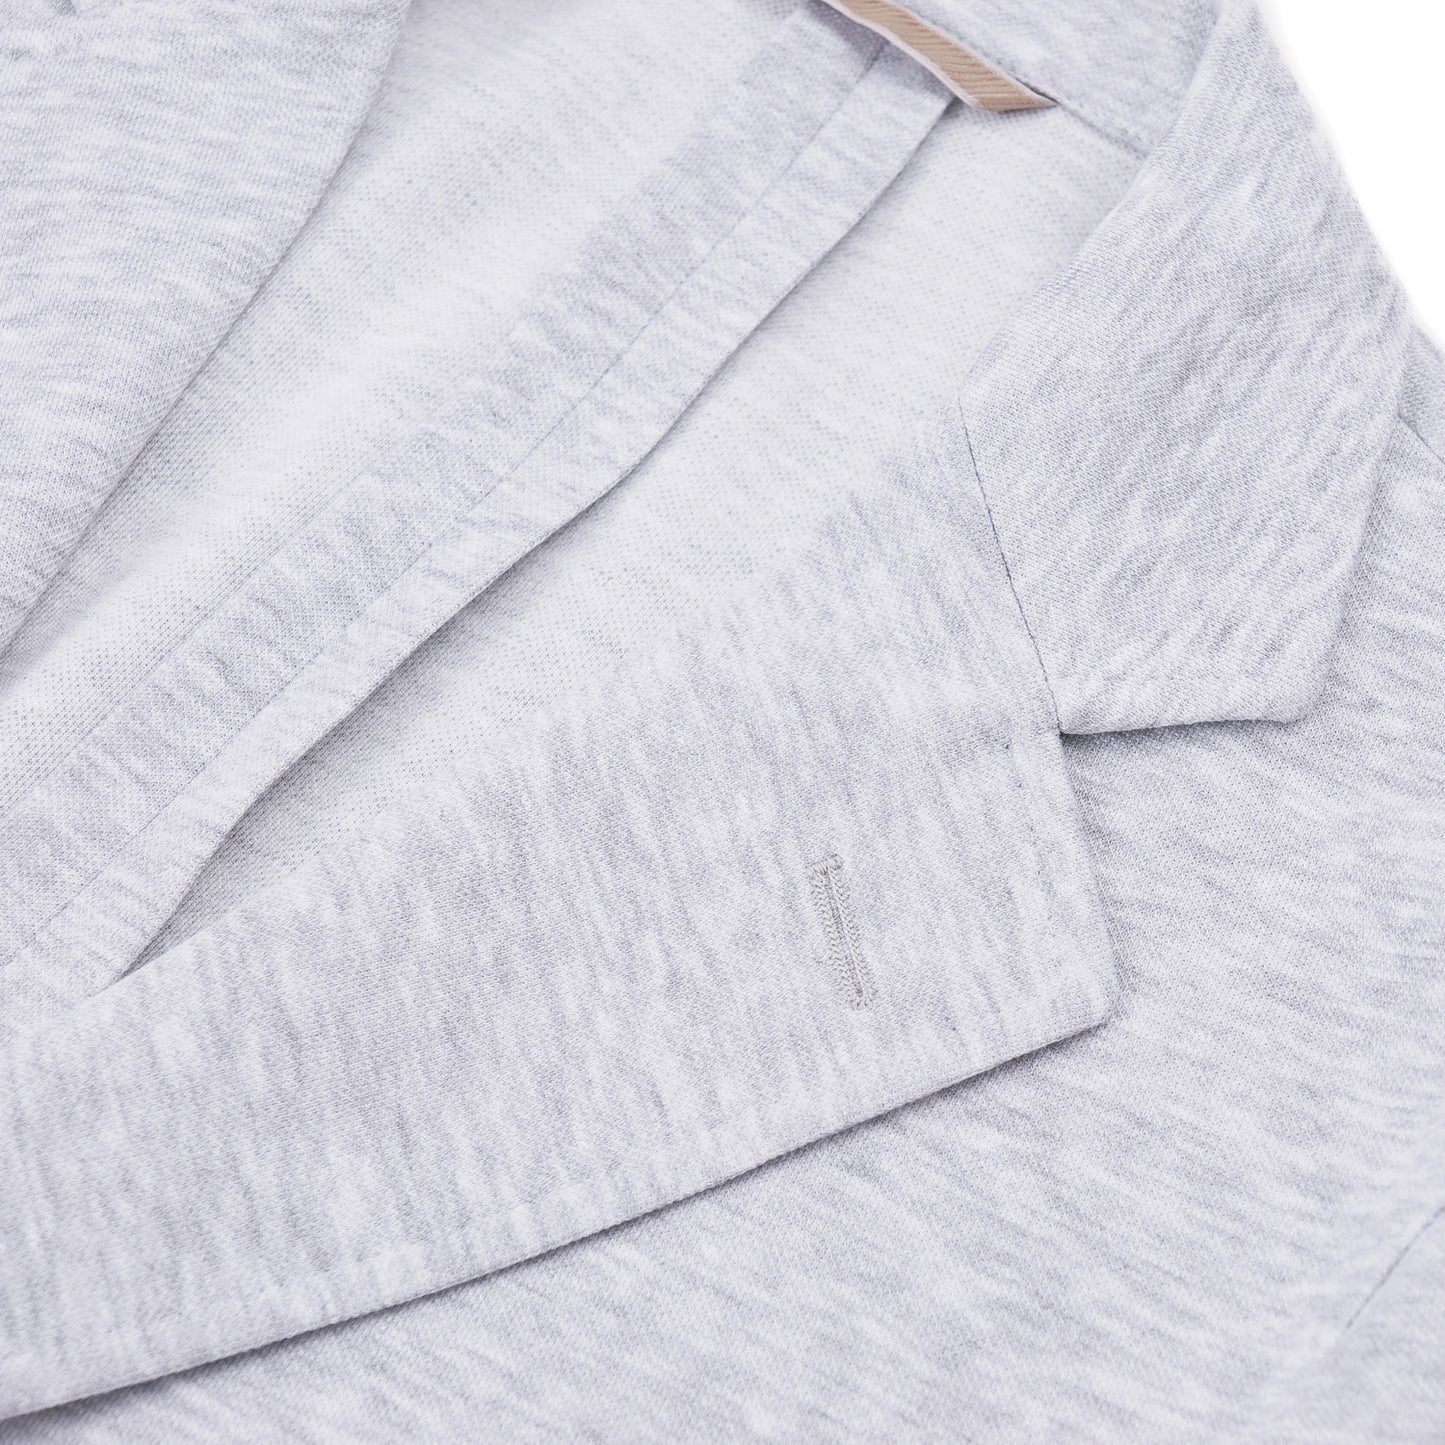 Peserico Slim-Fit Jersey Cotton Blazer - Top Shelf Apparel